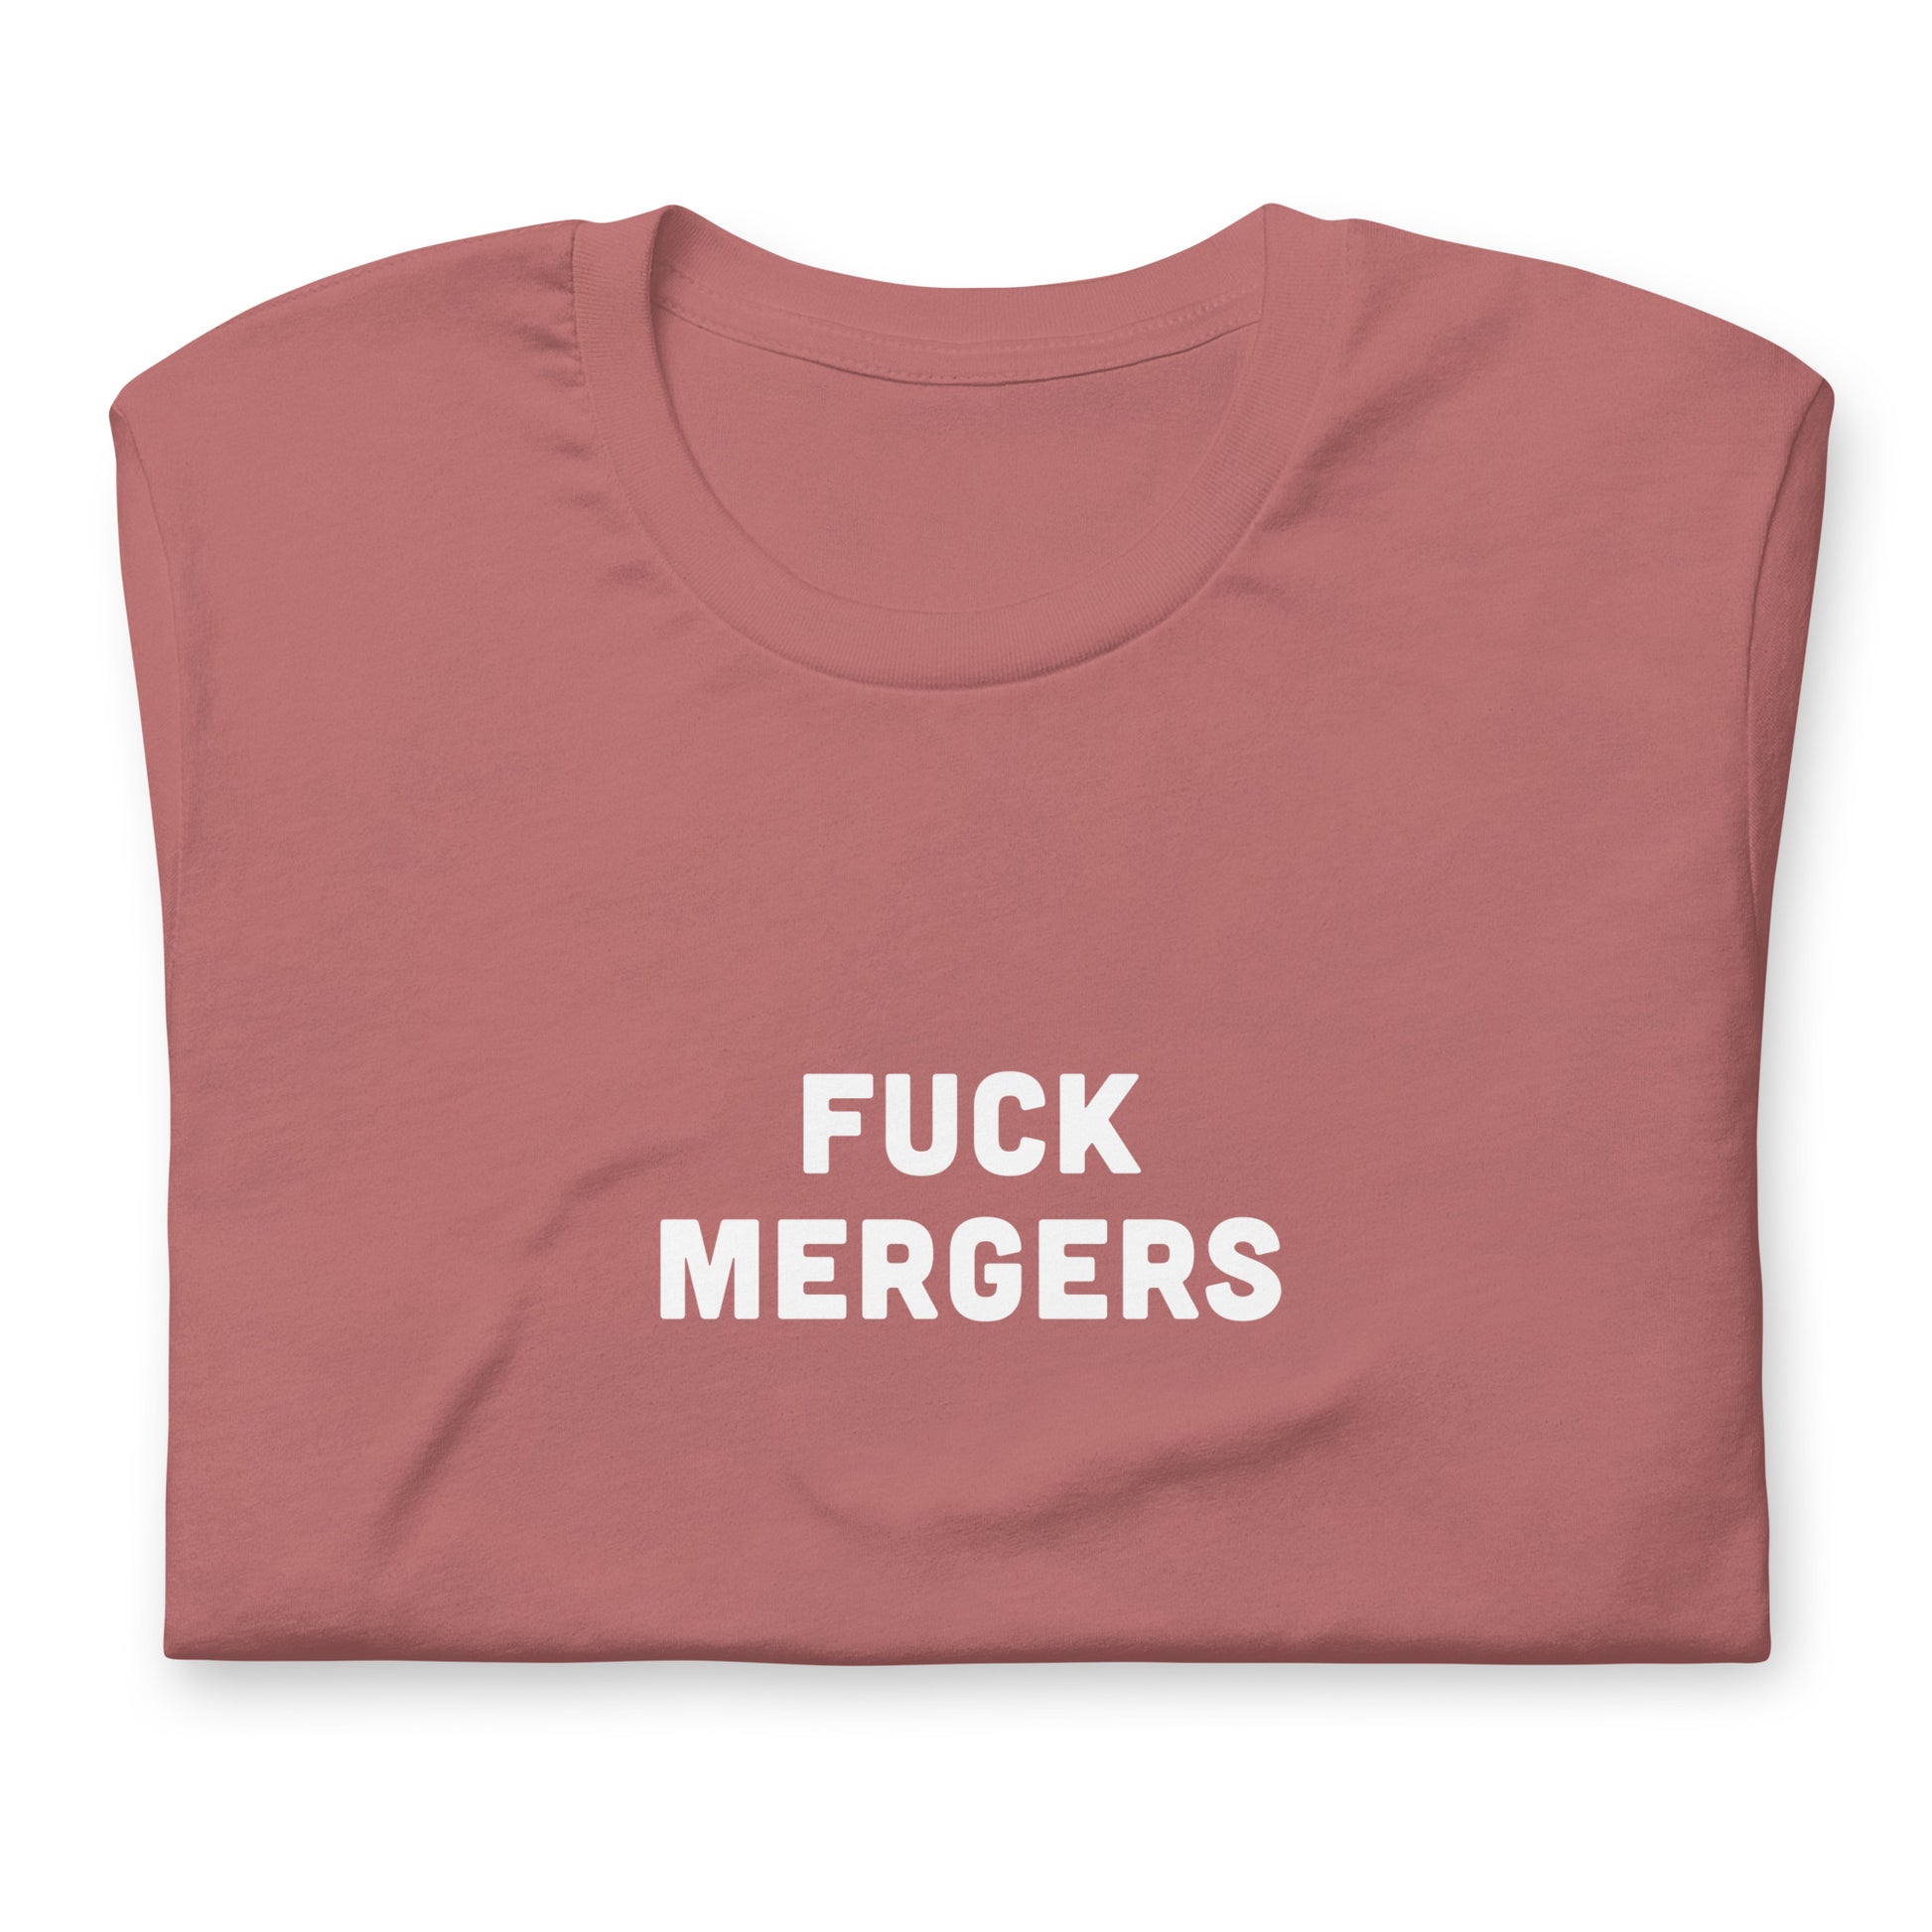 Fuck Mergers T-Shirt Size XL Color Navy